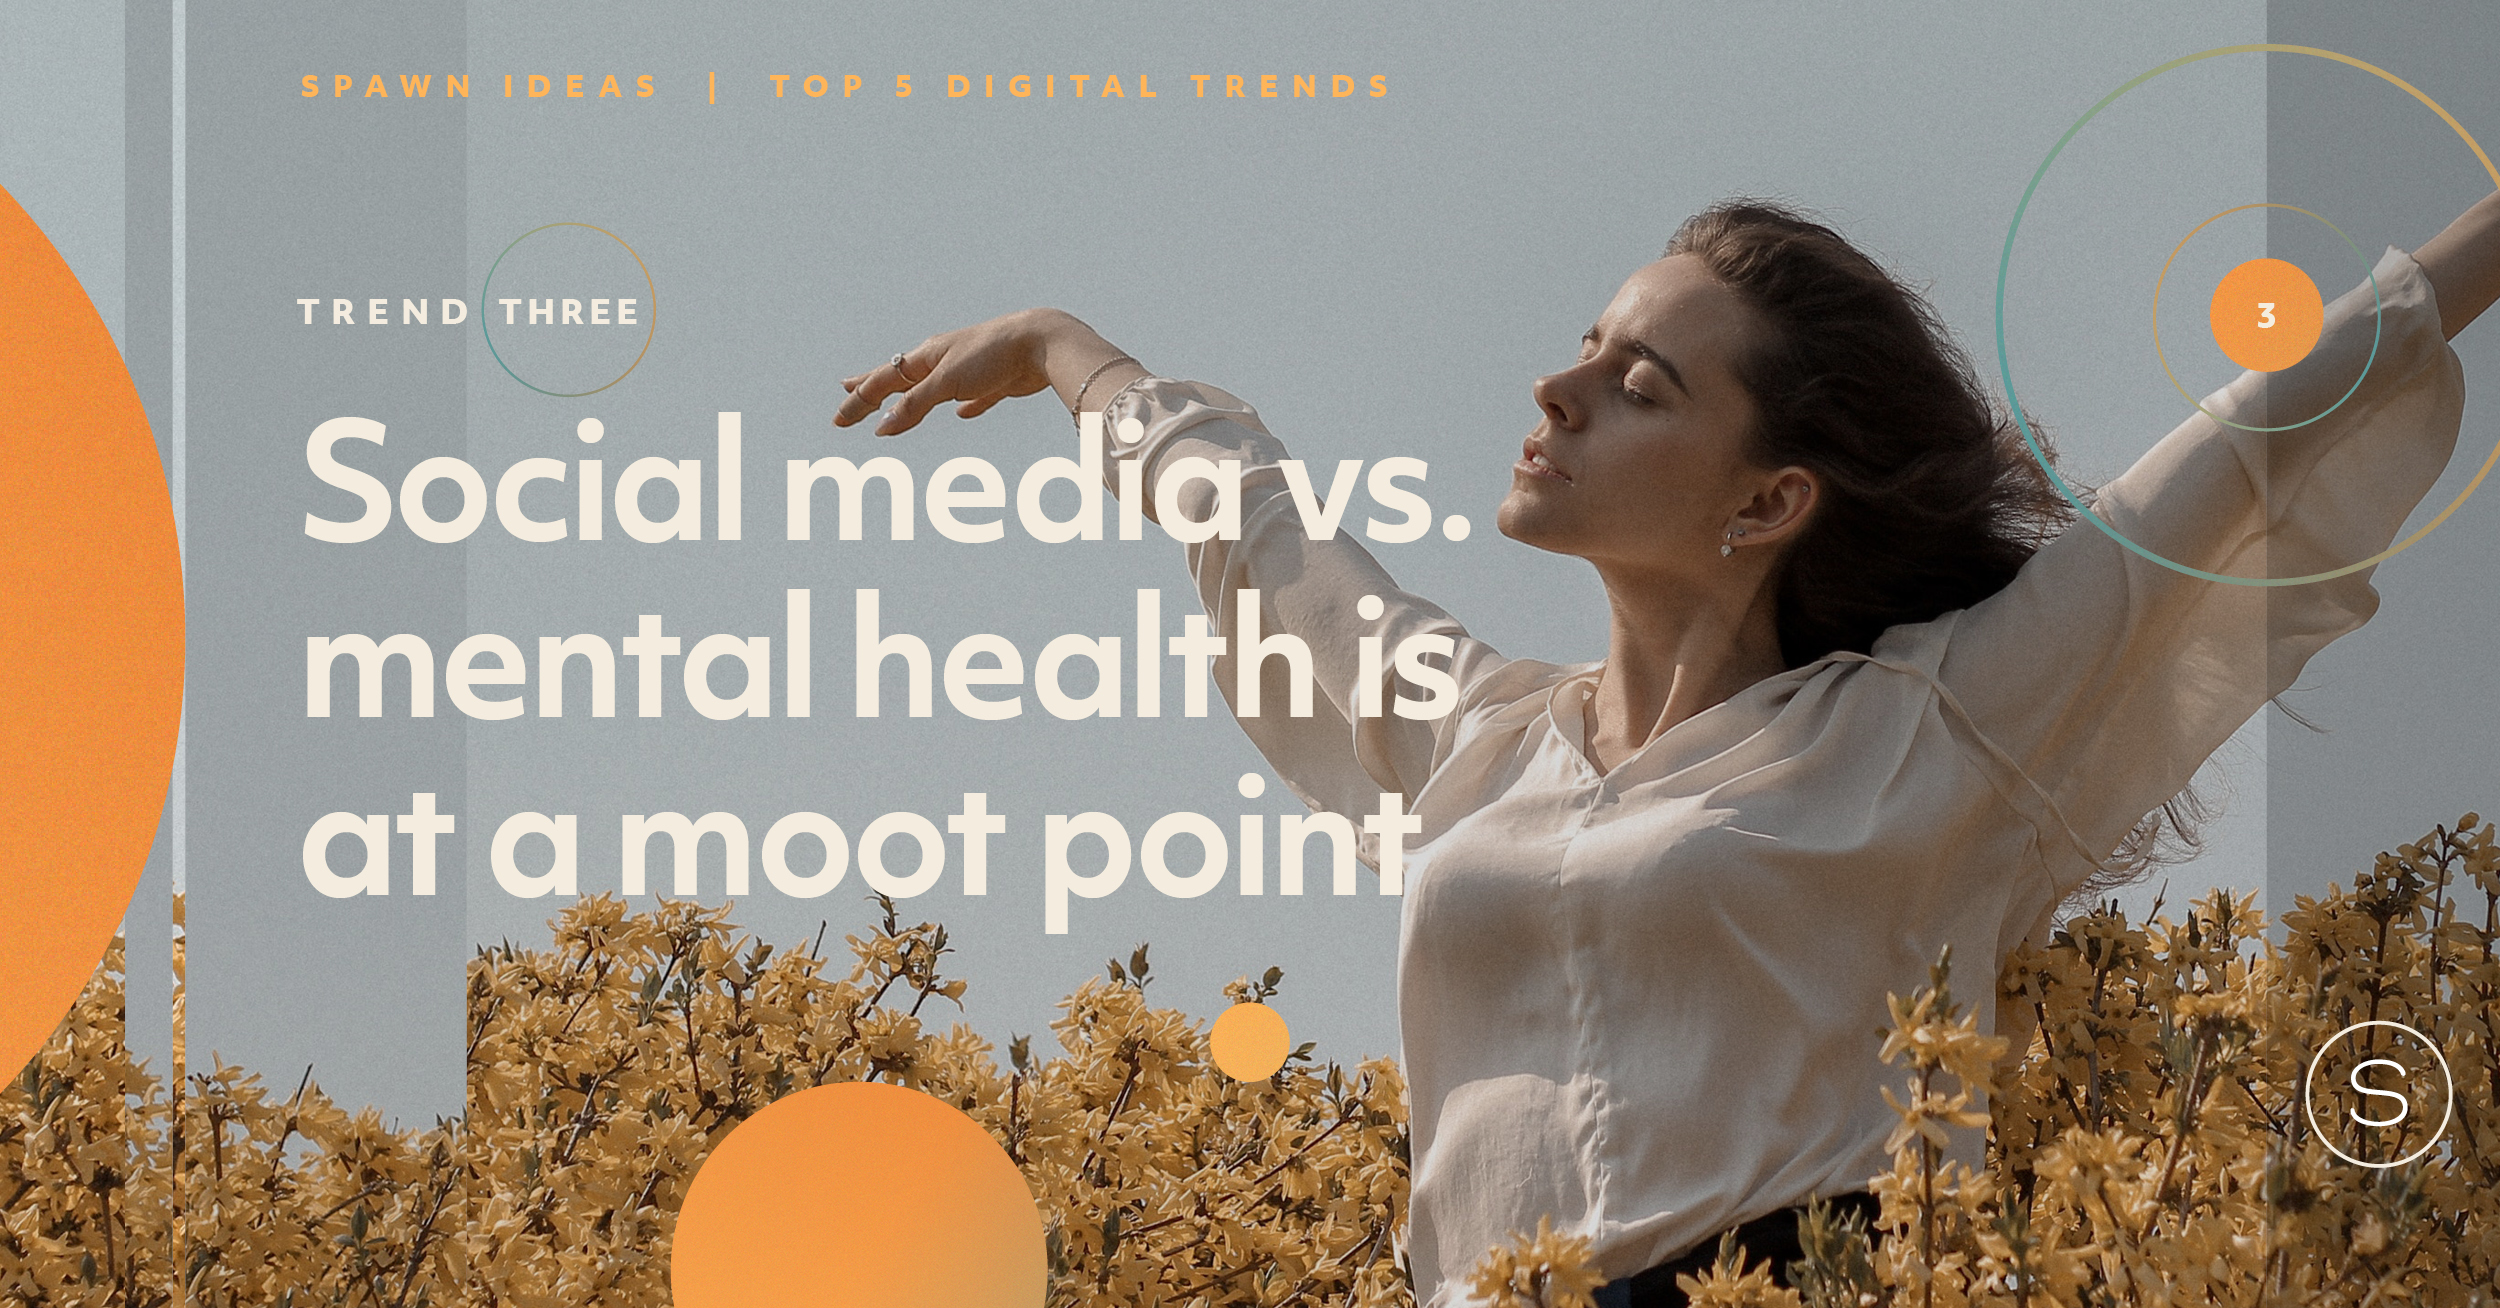 Top 5 Trends Creative_mental Health